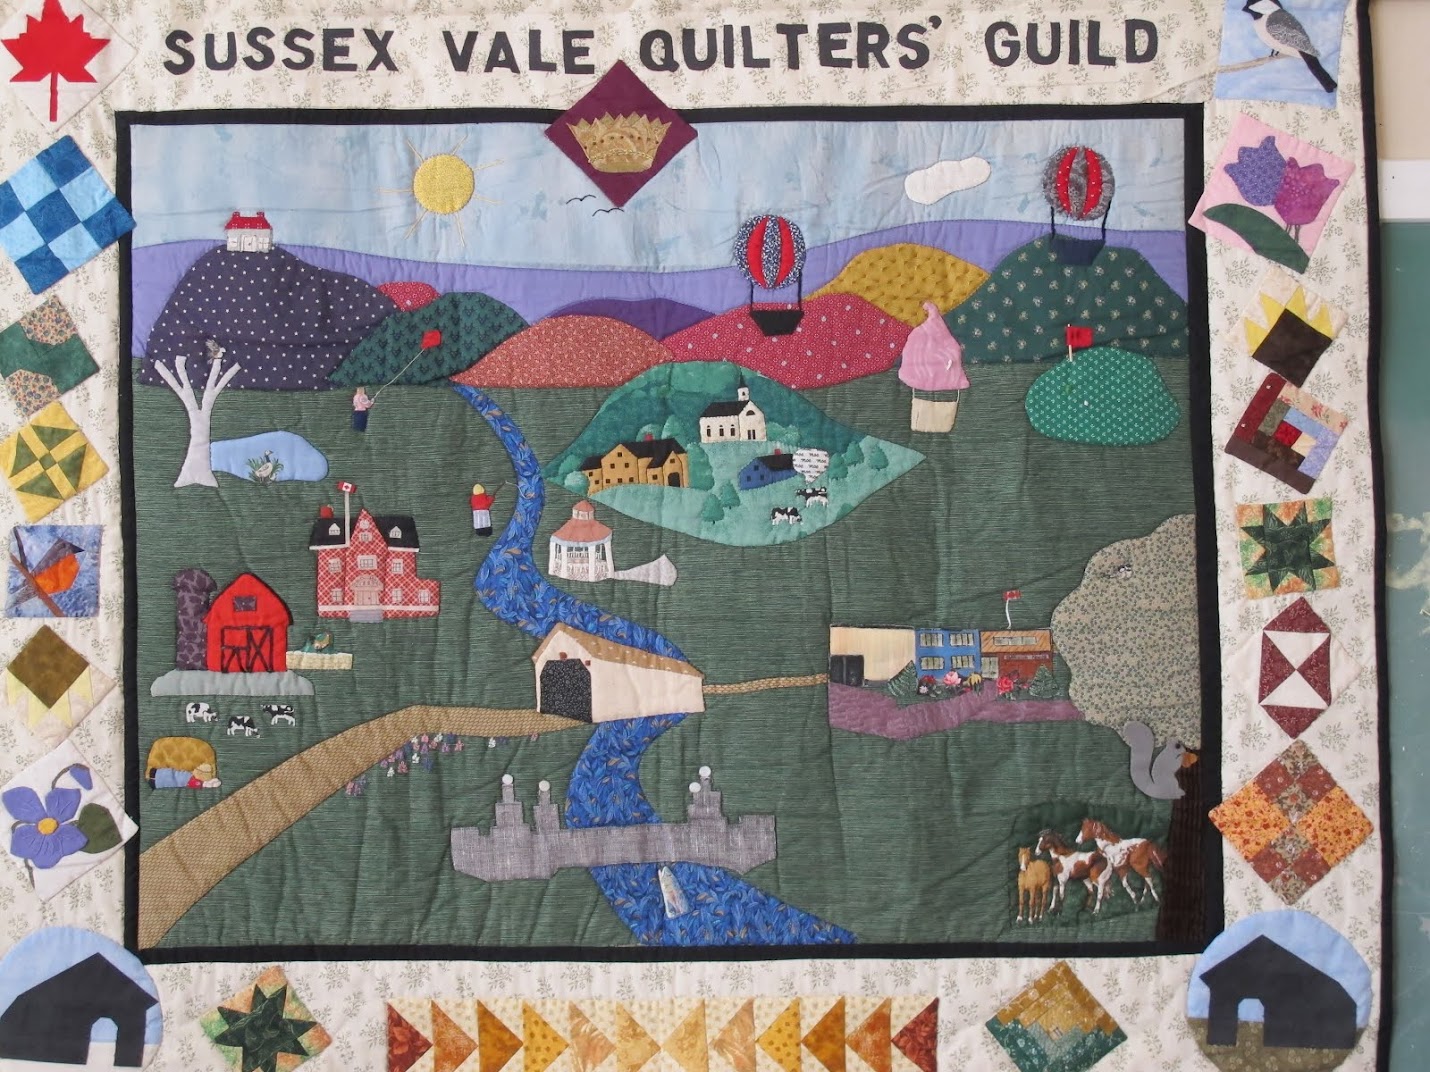 Sussex Vale Quilters' Guild